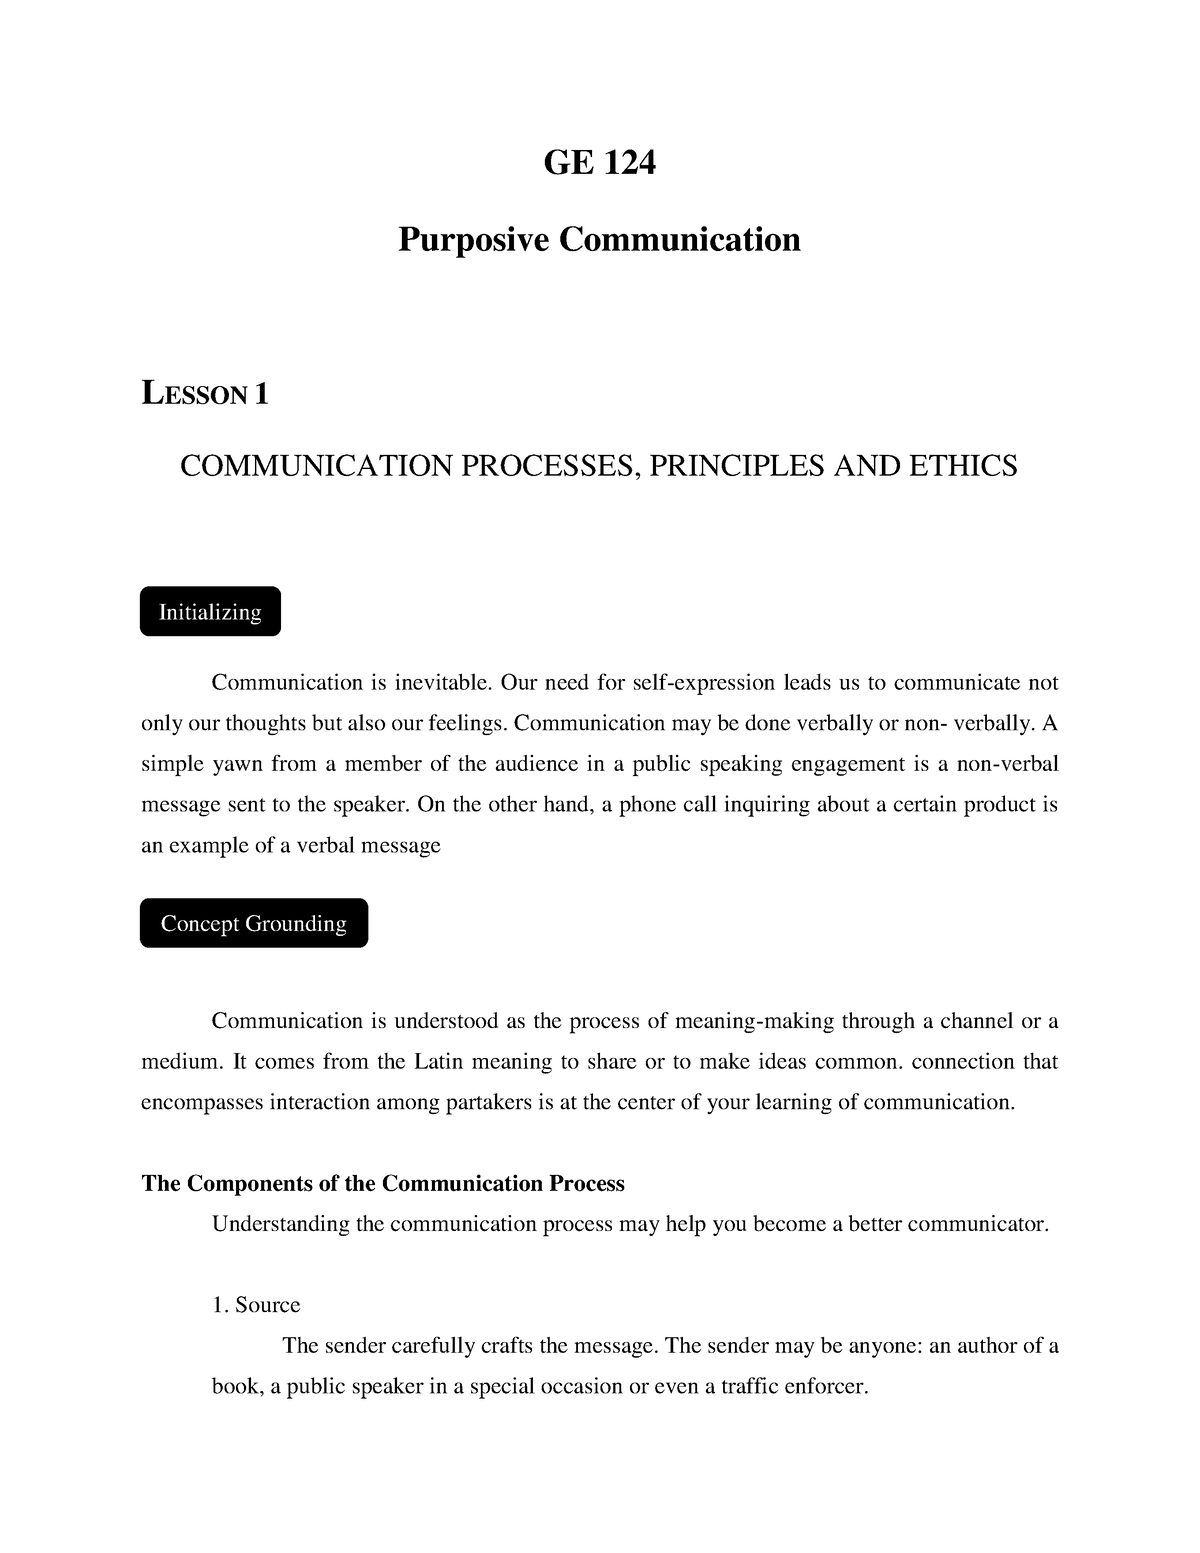 purposive communication essay example